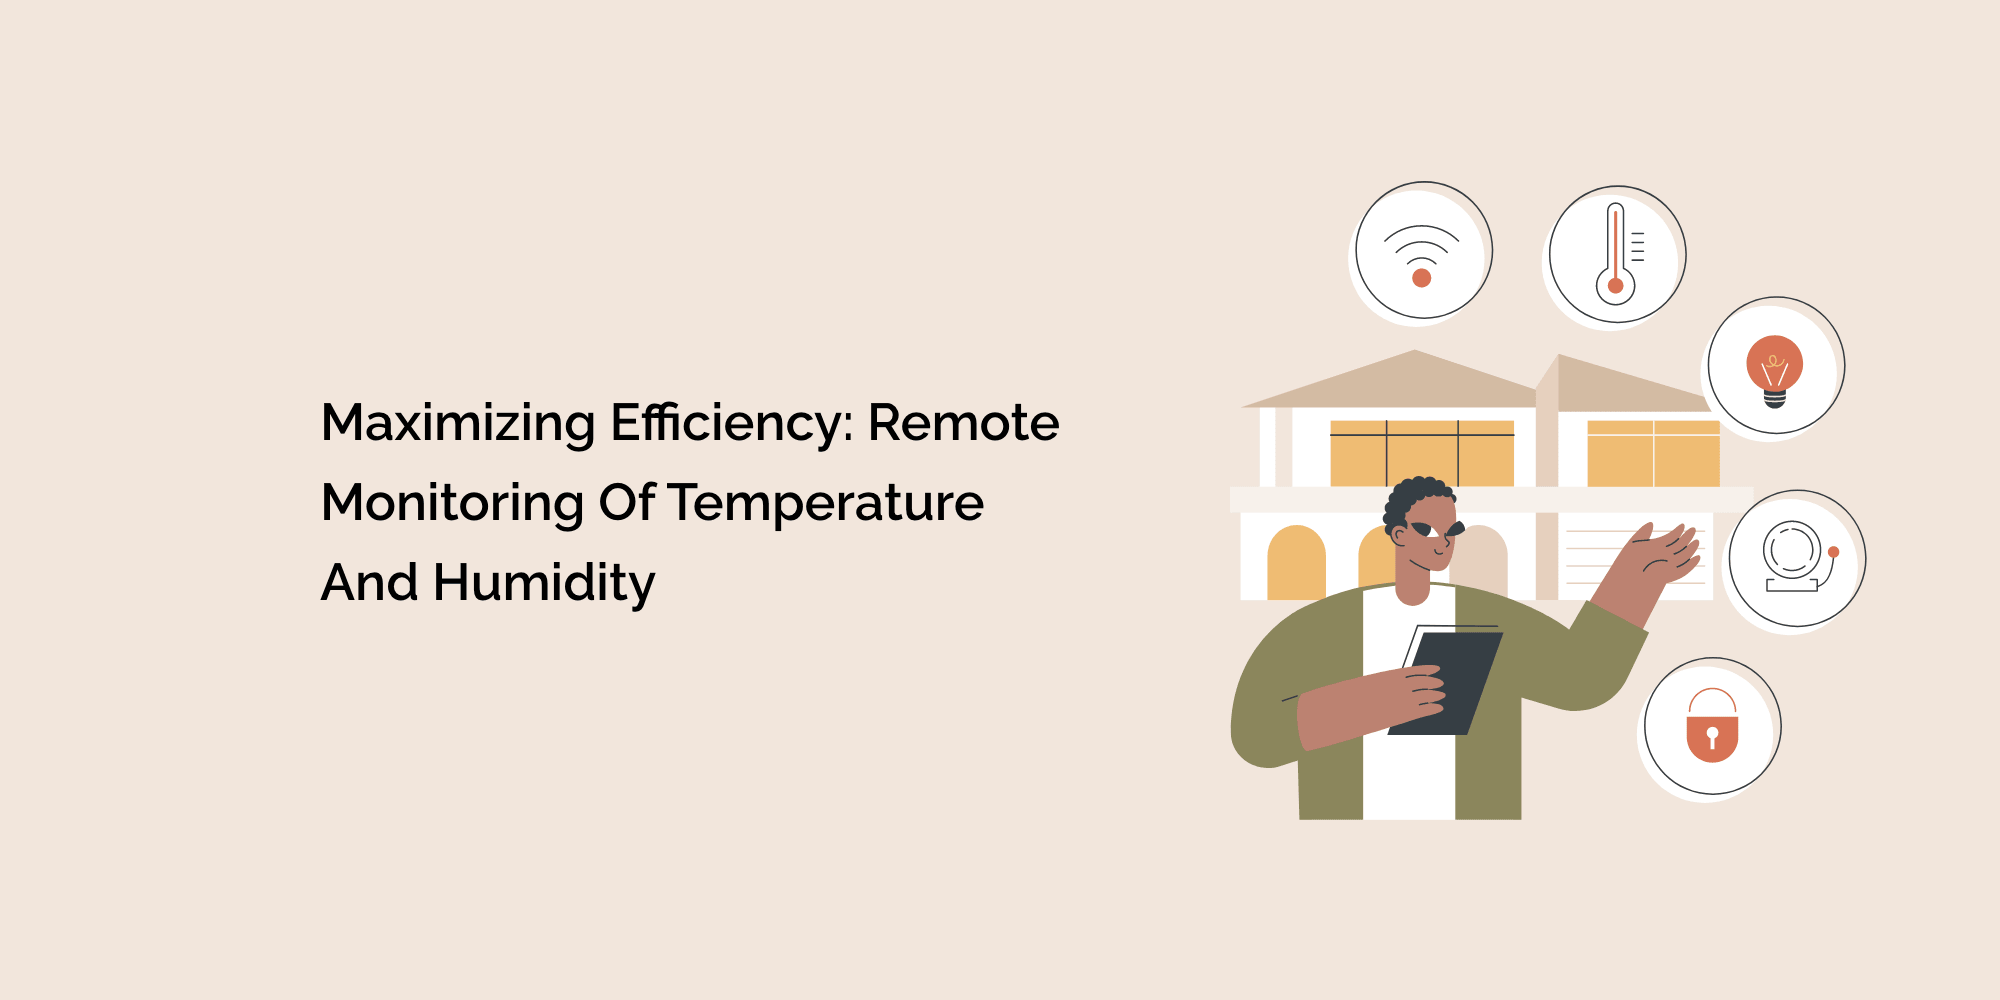 Maximizing Efficiency: Remote Monitoring of Temperature and Humidity